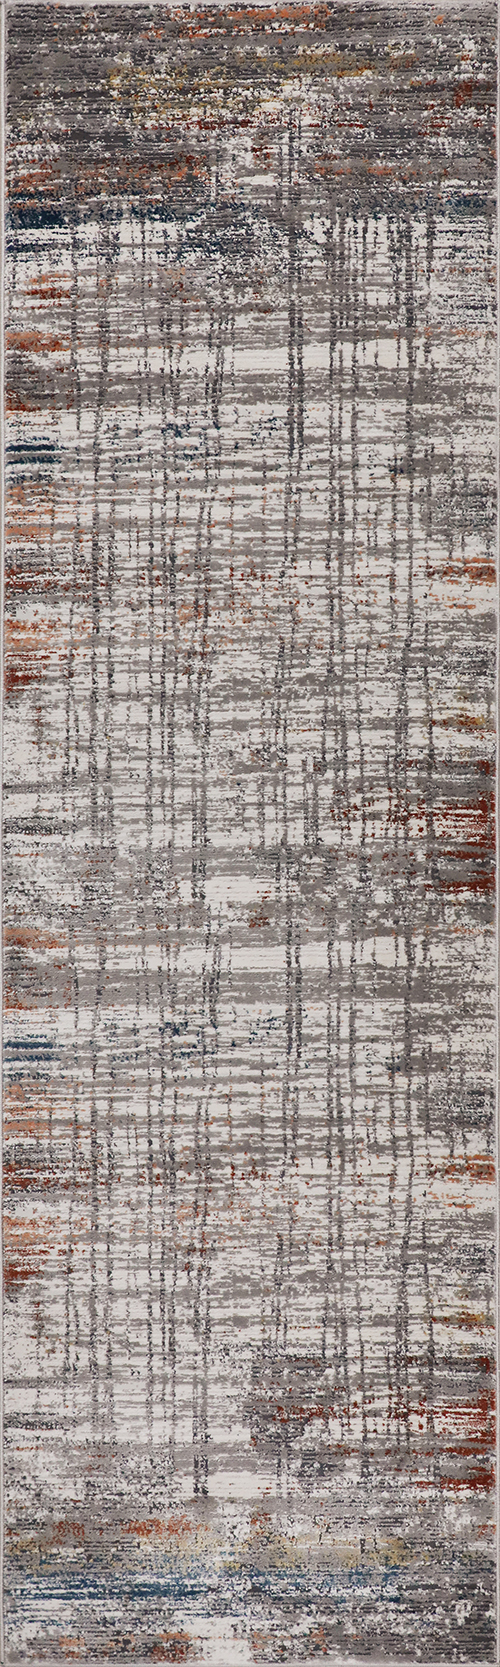 Nourison Rugs - Rustic Textures Runner RUS12 Rug in Grey / Multicolour - 2.3m x 0.66m